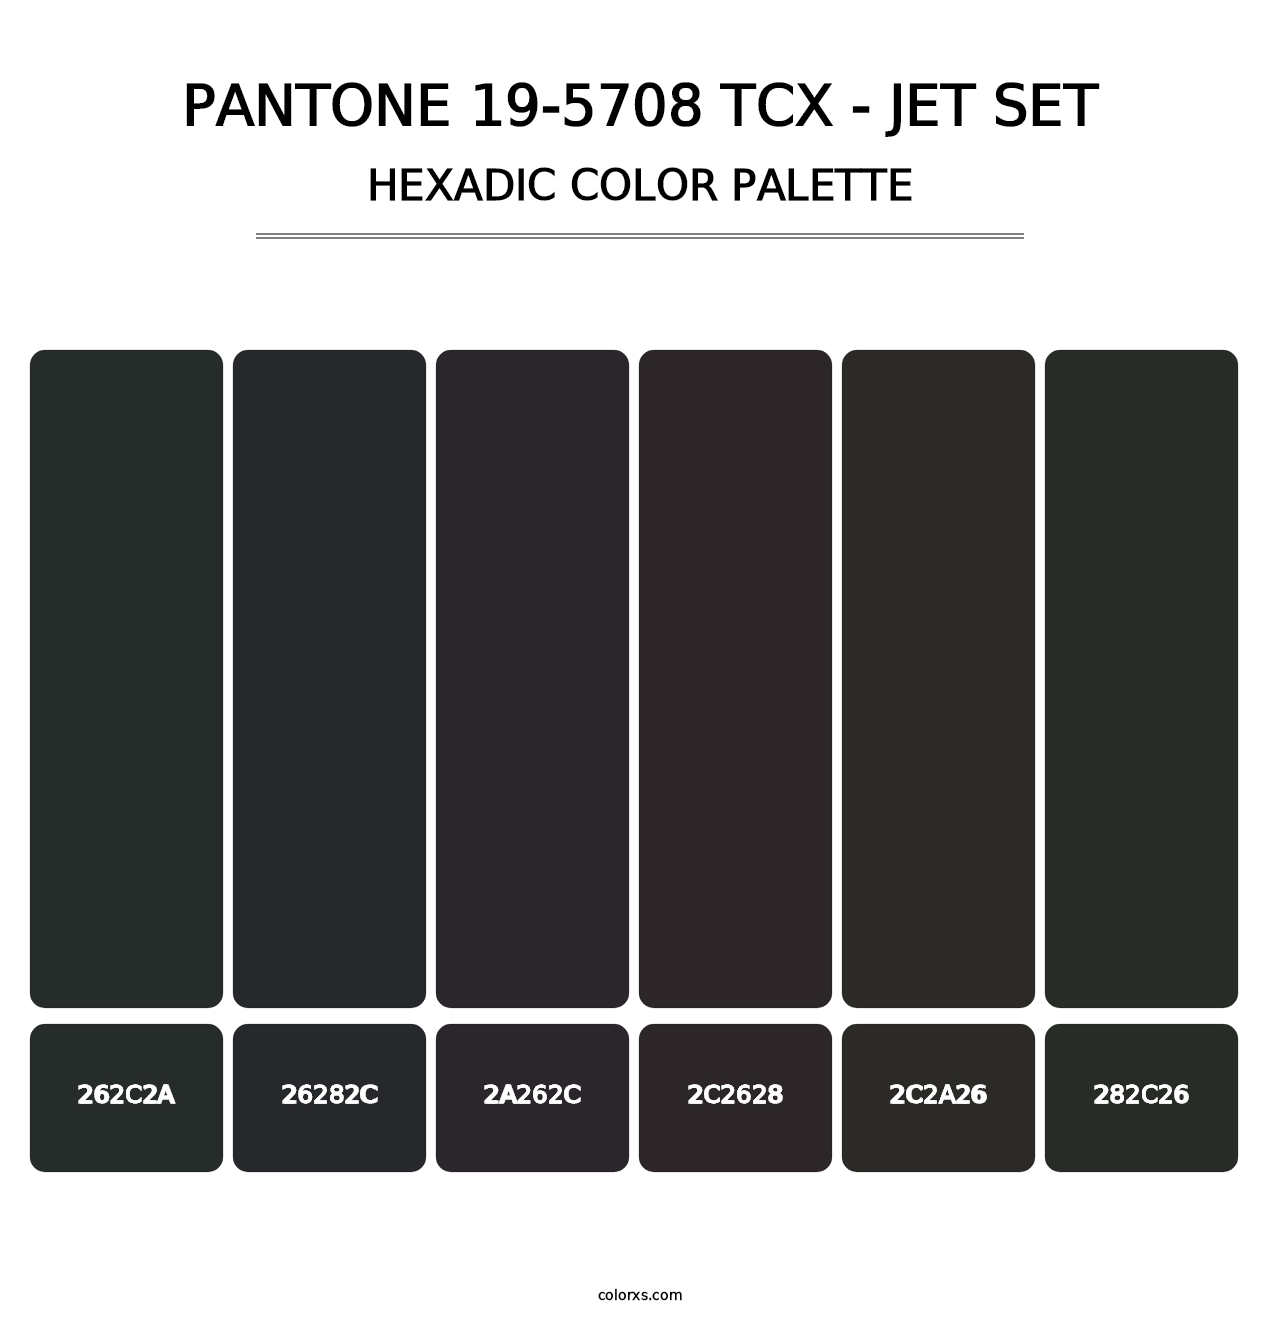 PANTONE 19-5708 TCX - Jet Set - Hexadic Color Palette